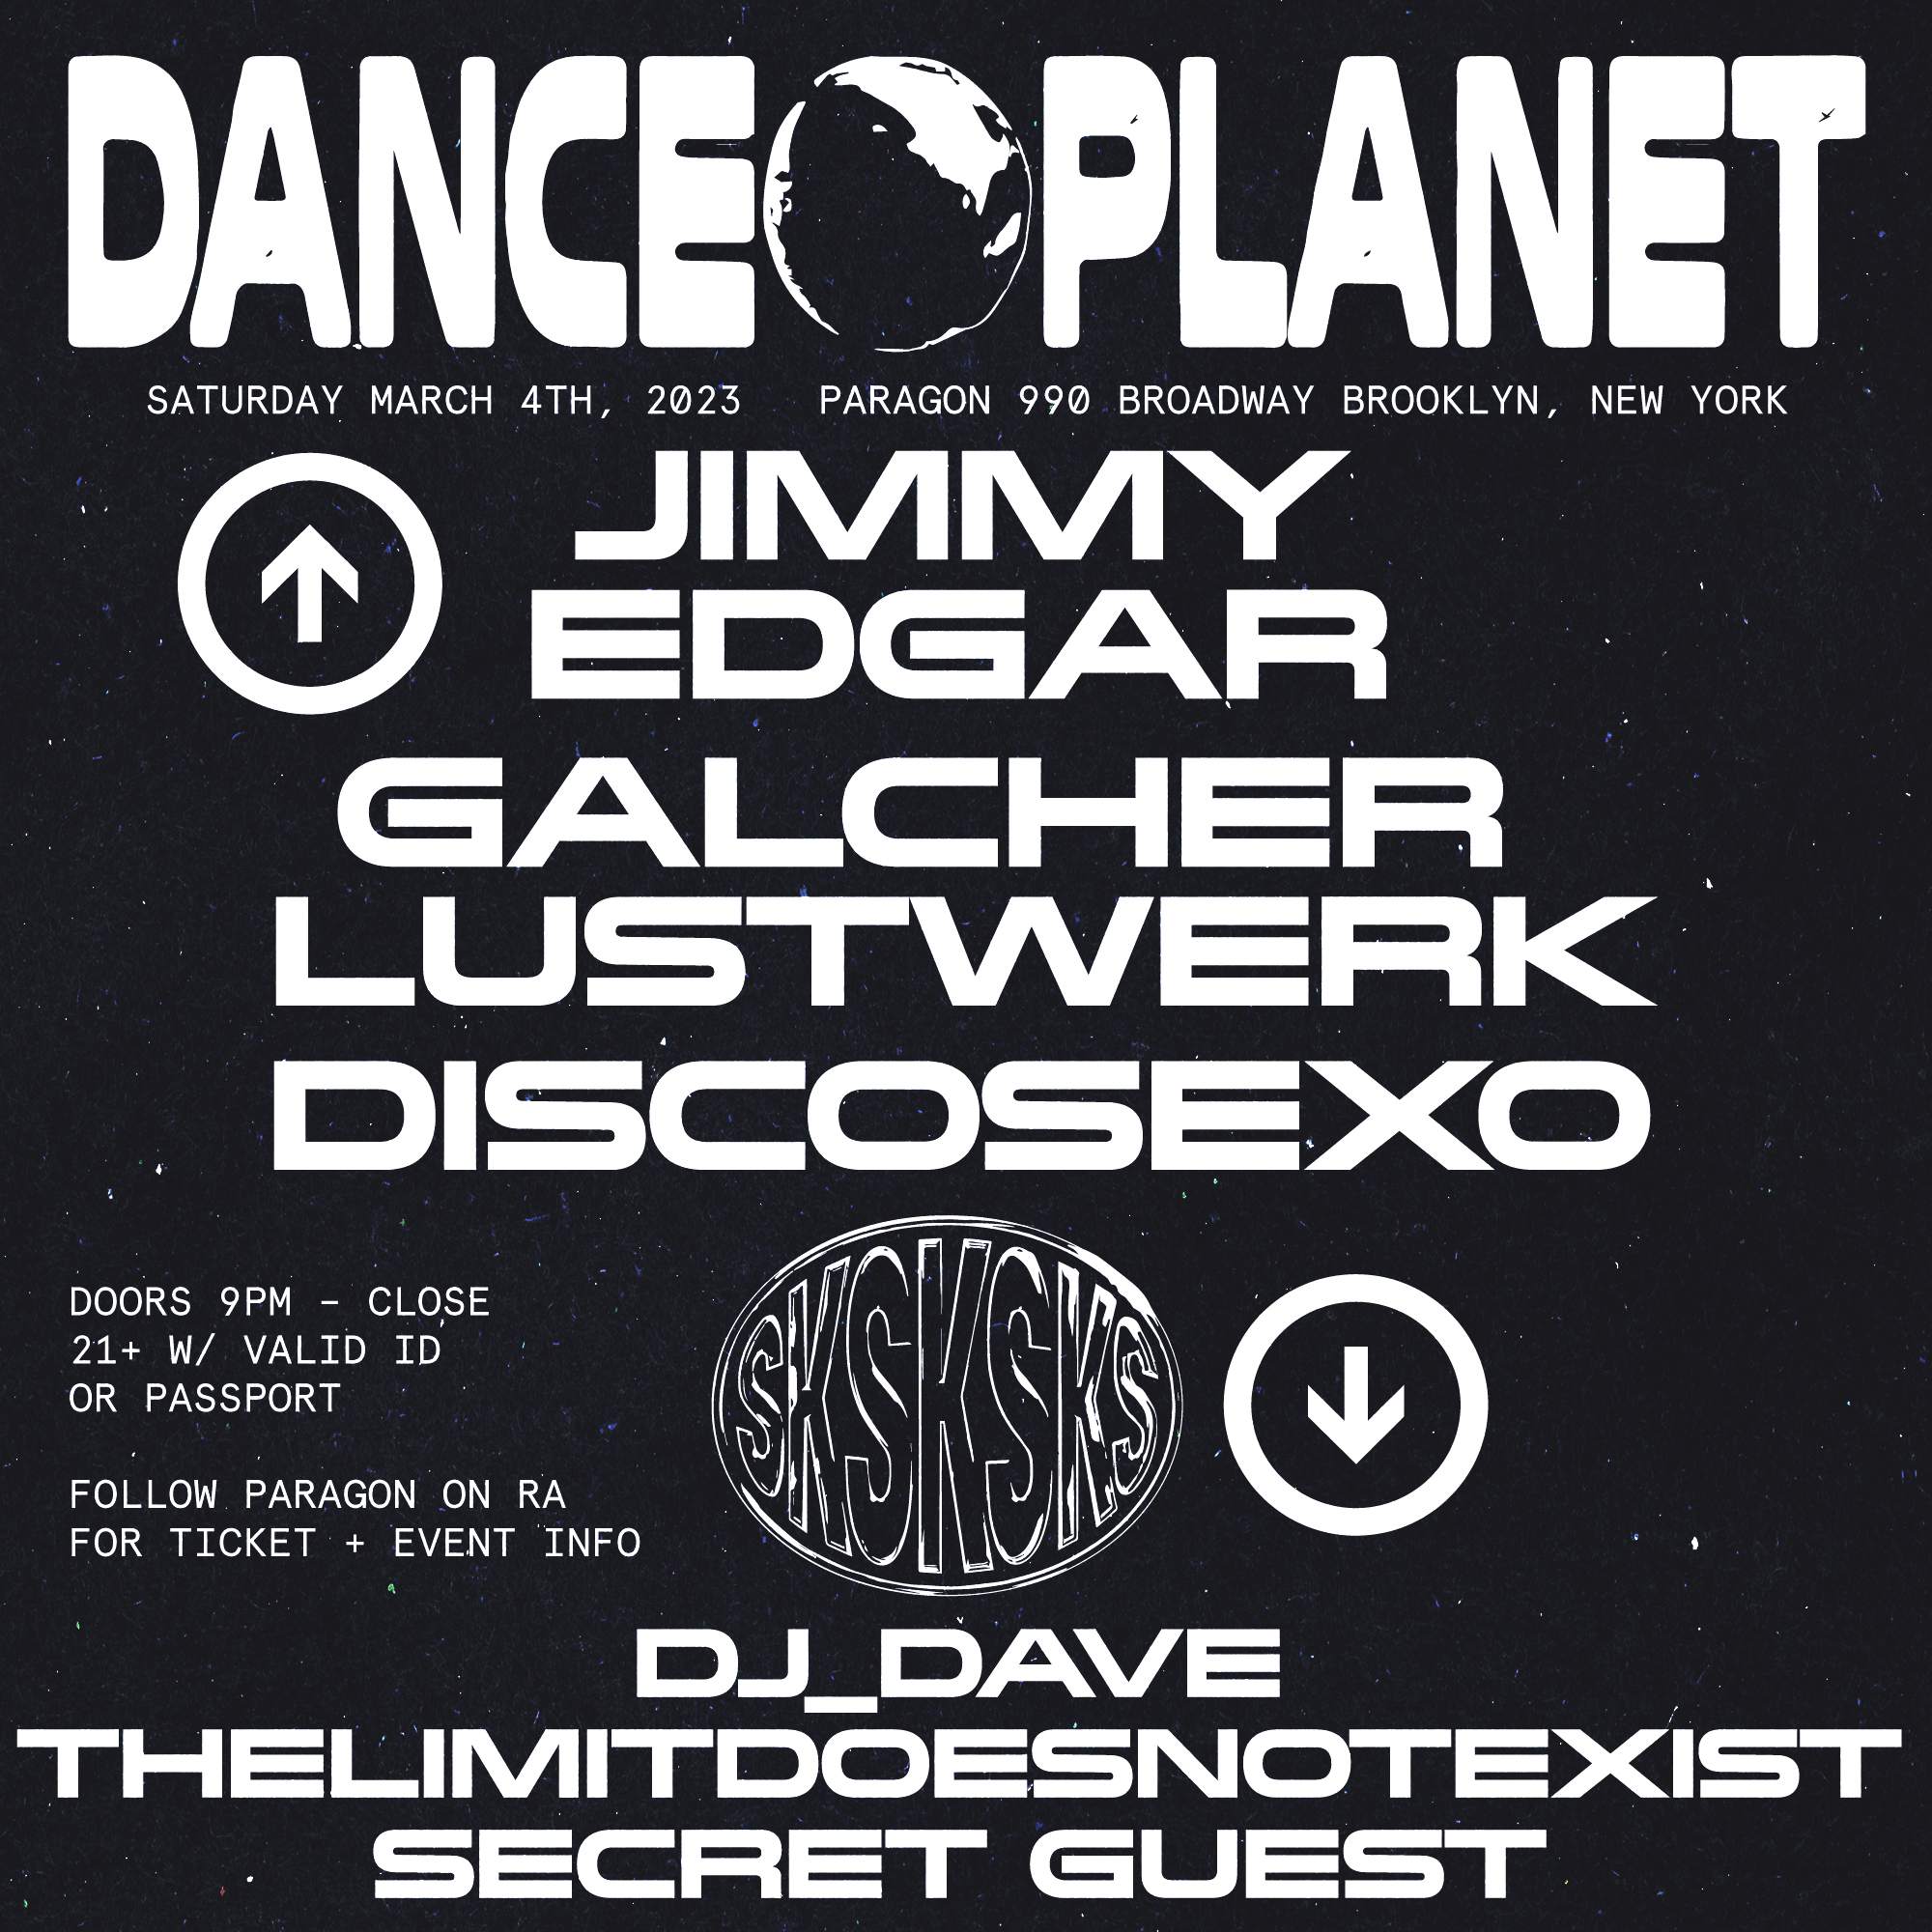 DANCE PLANET: Jimmy Edgar, Galcher Lustwerk, Discosexo + SKSKSKS - フライヤー表